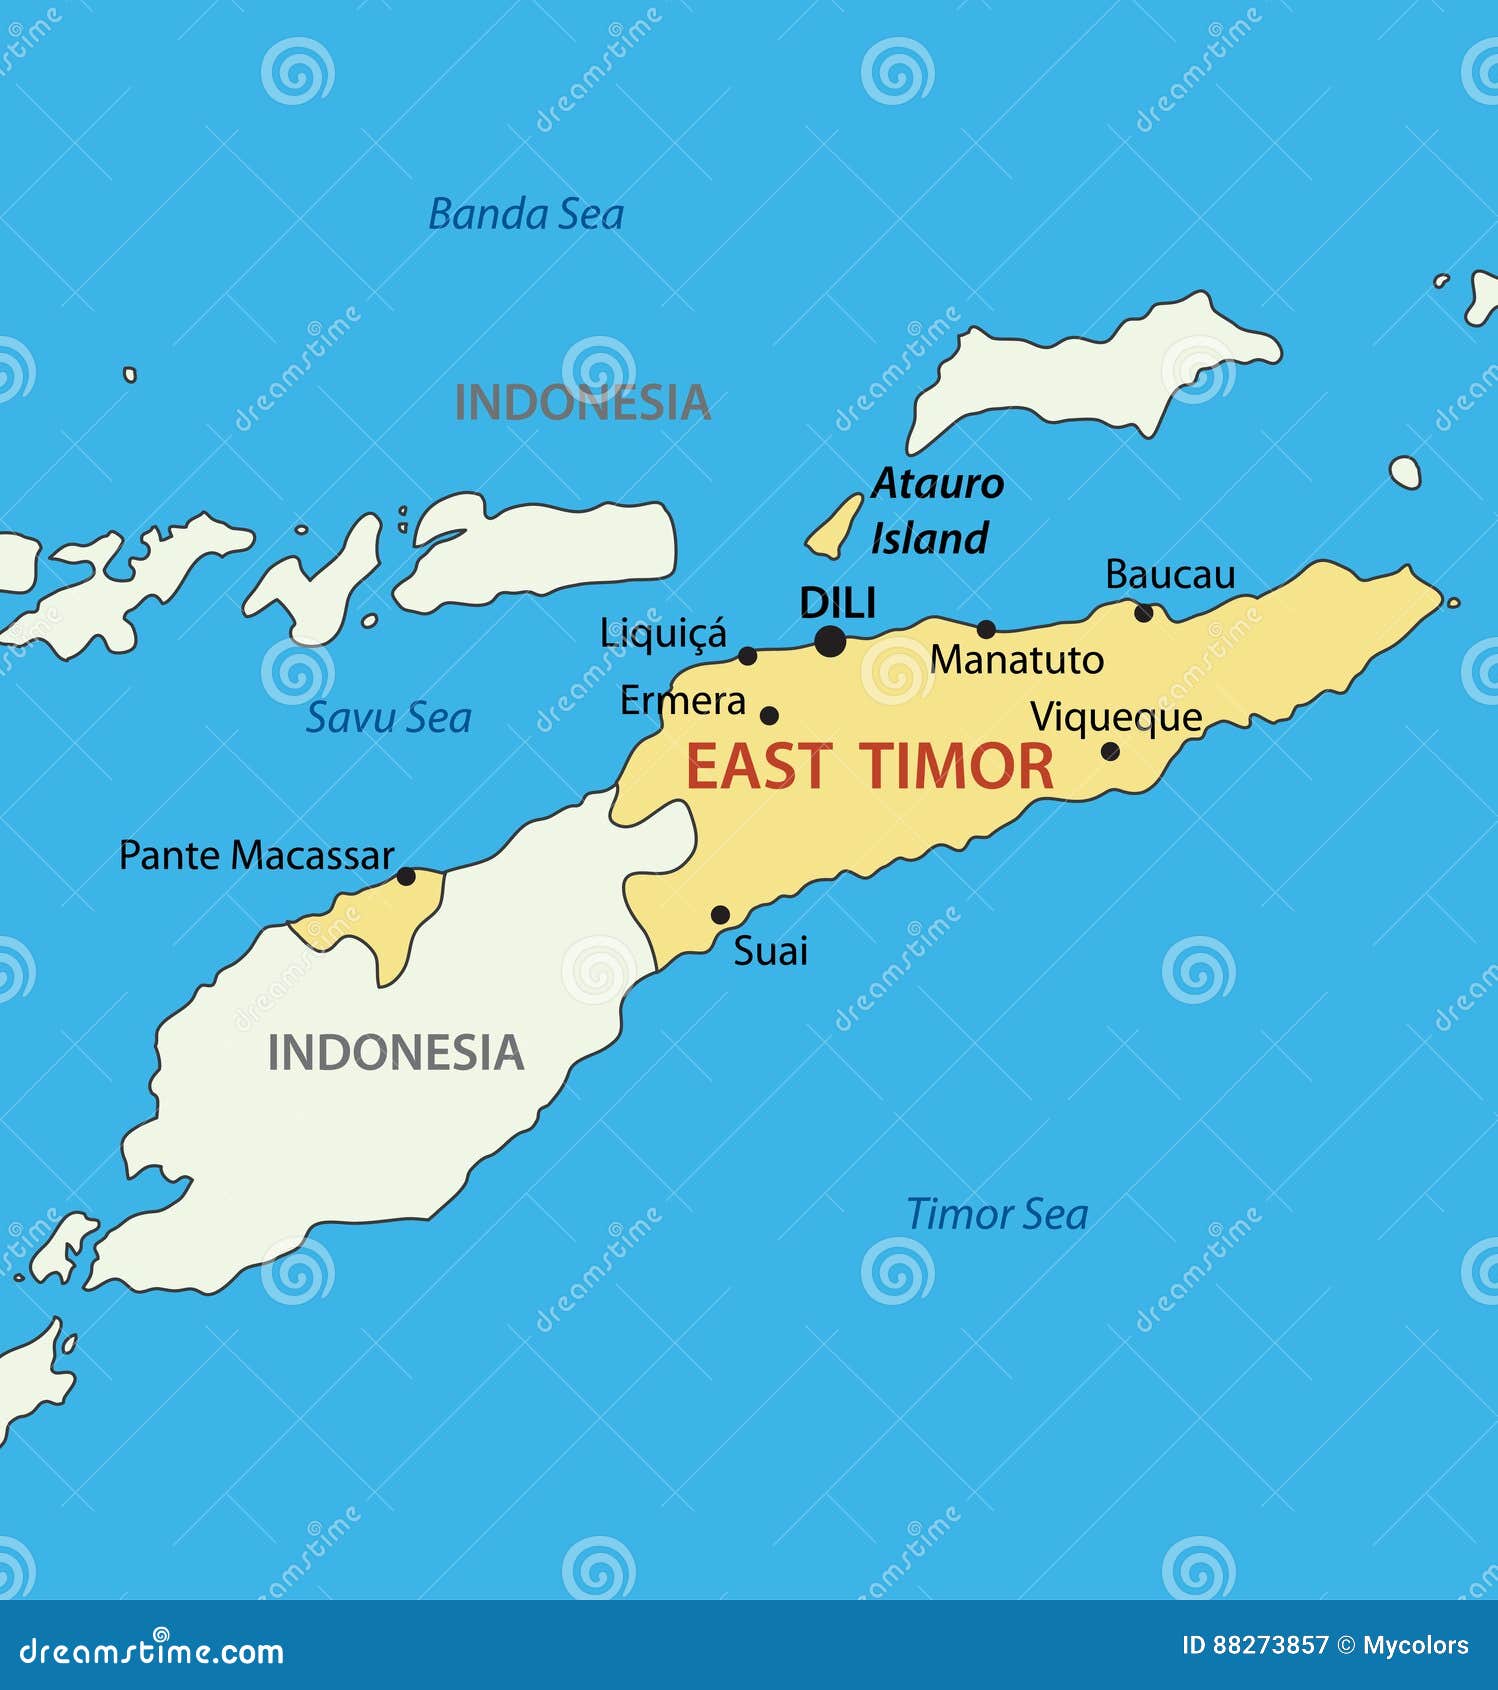 democratic republic of timor-leste - east timor -  map